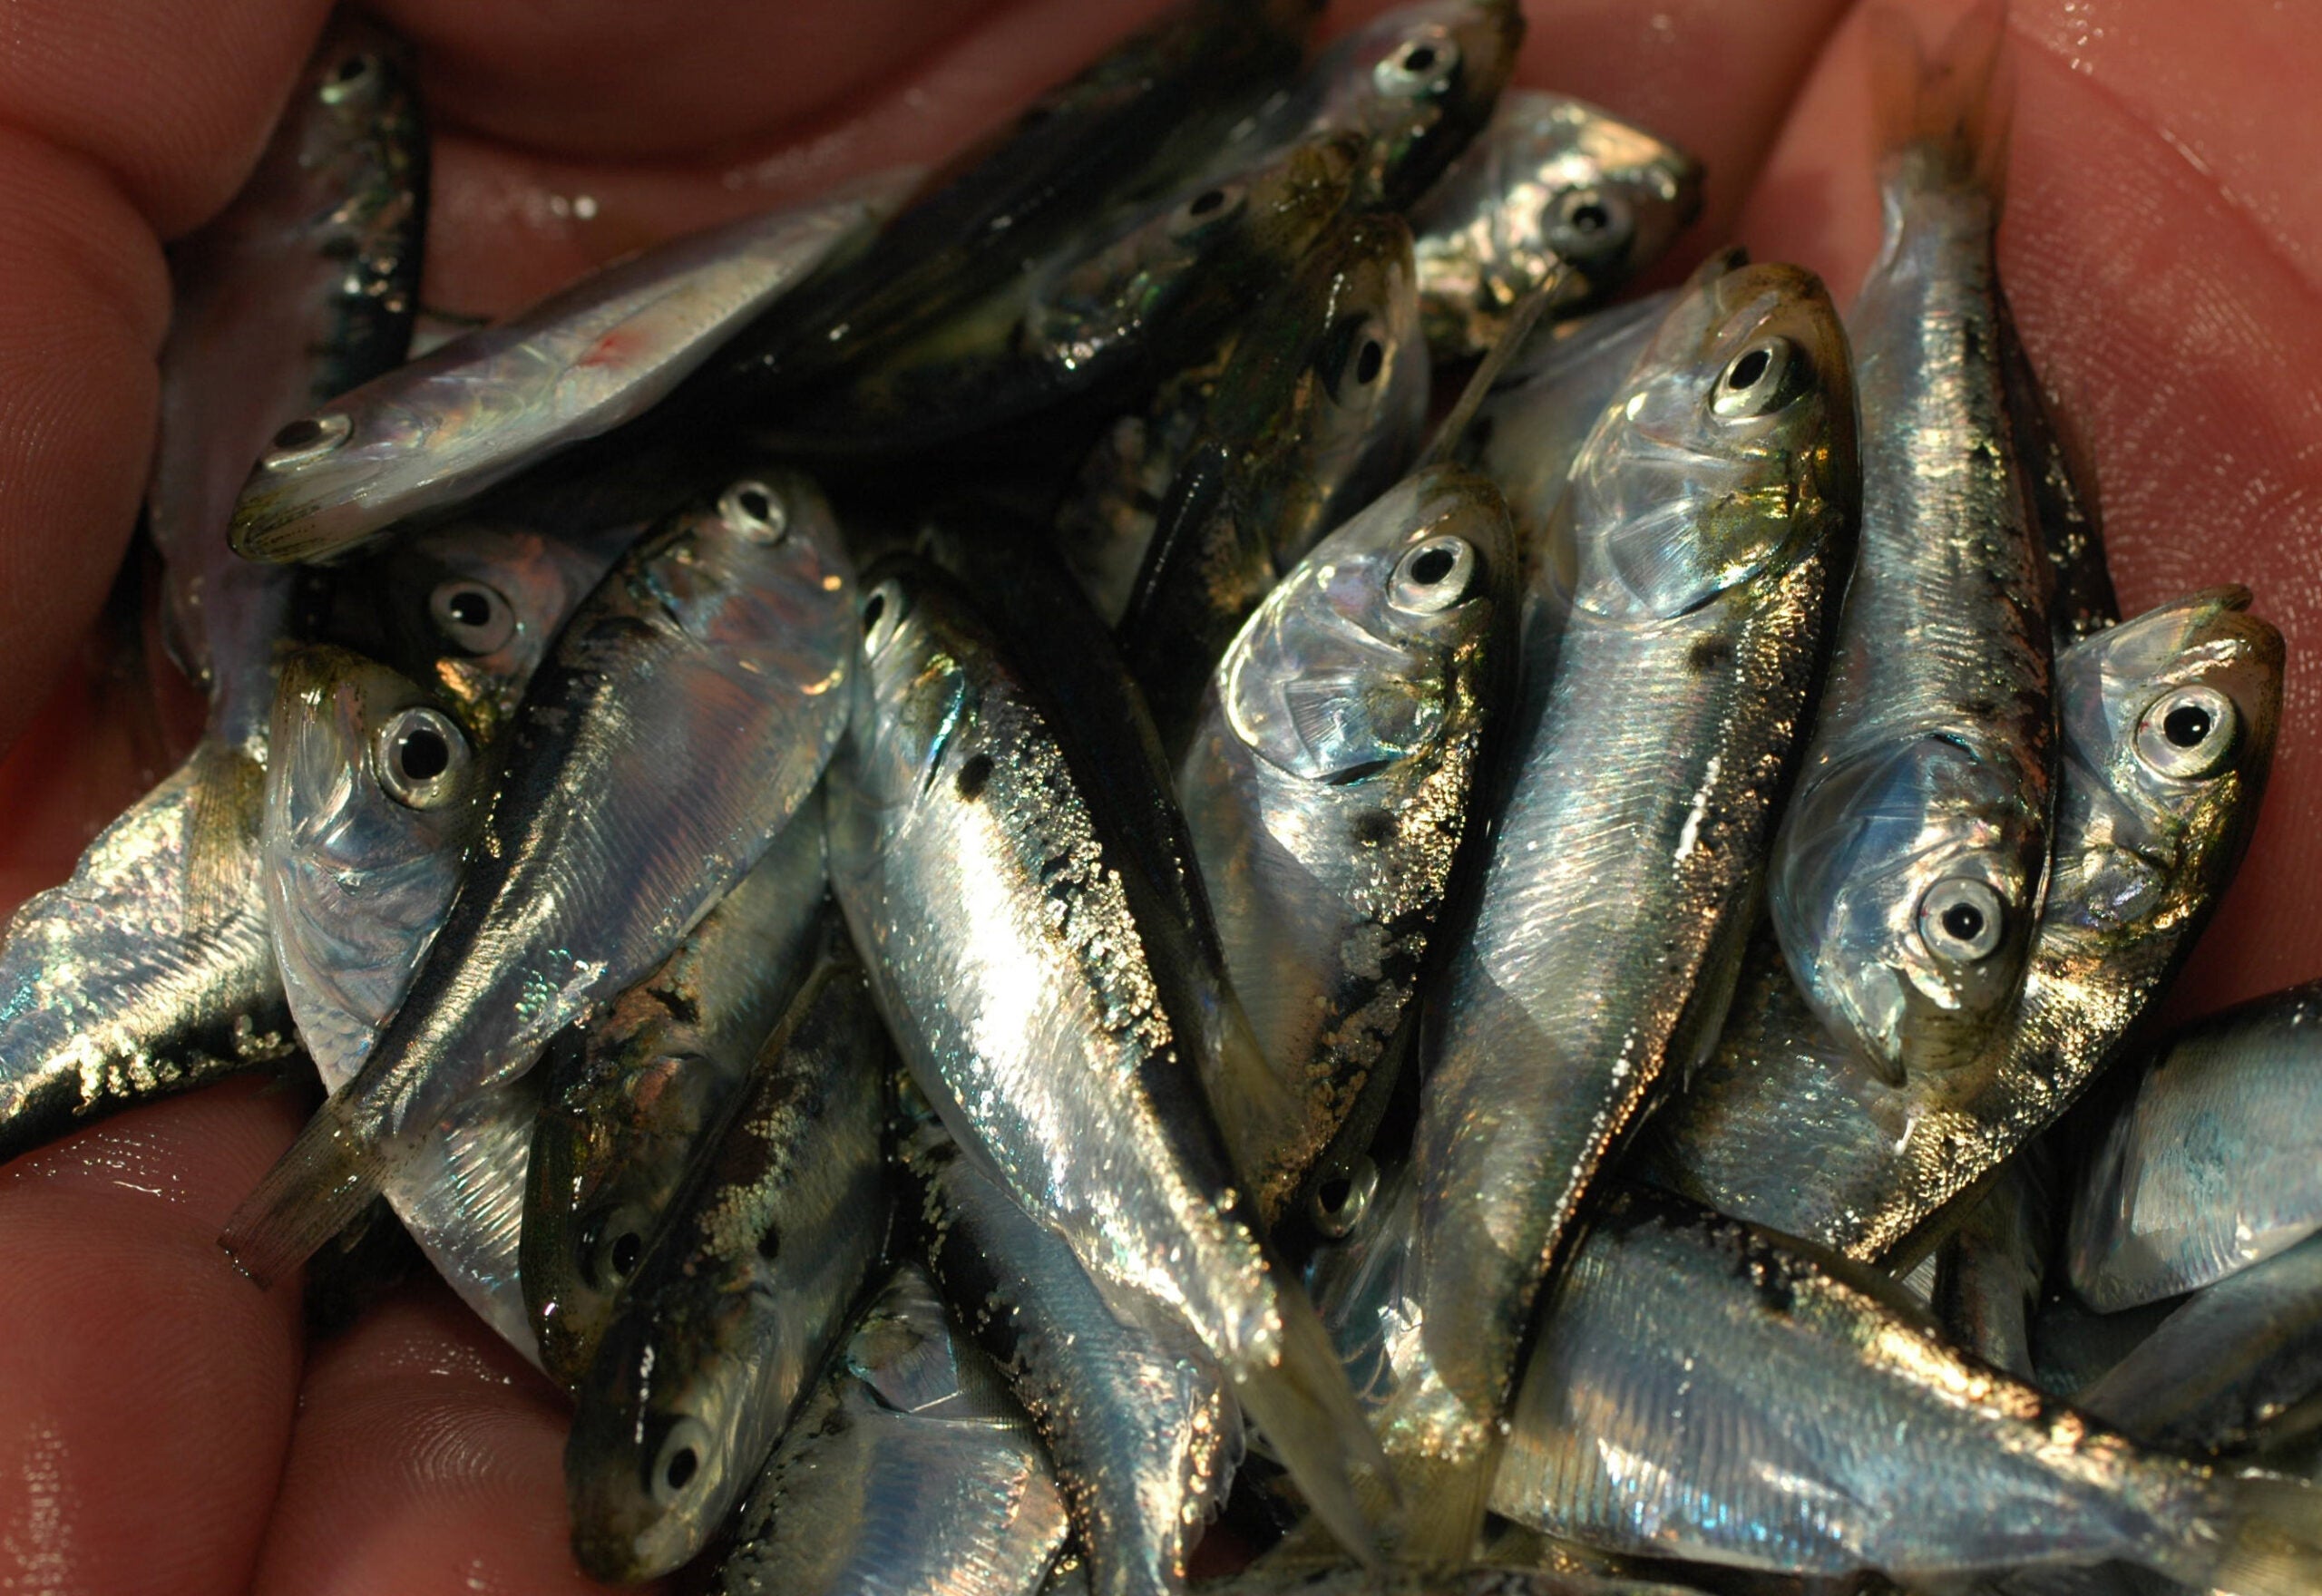 Common Types of Baitfish